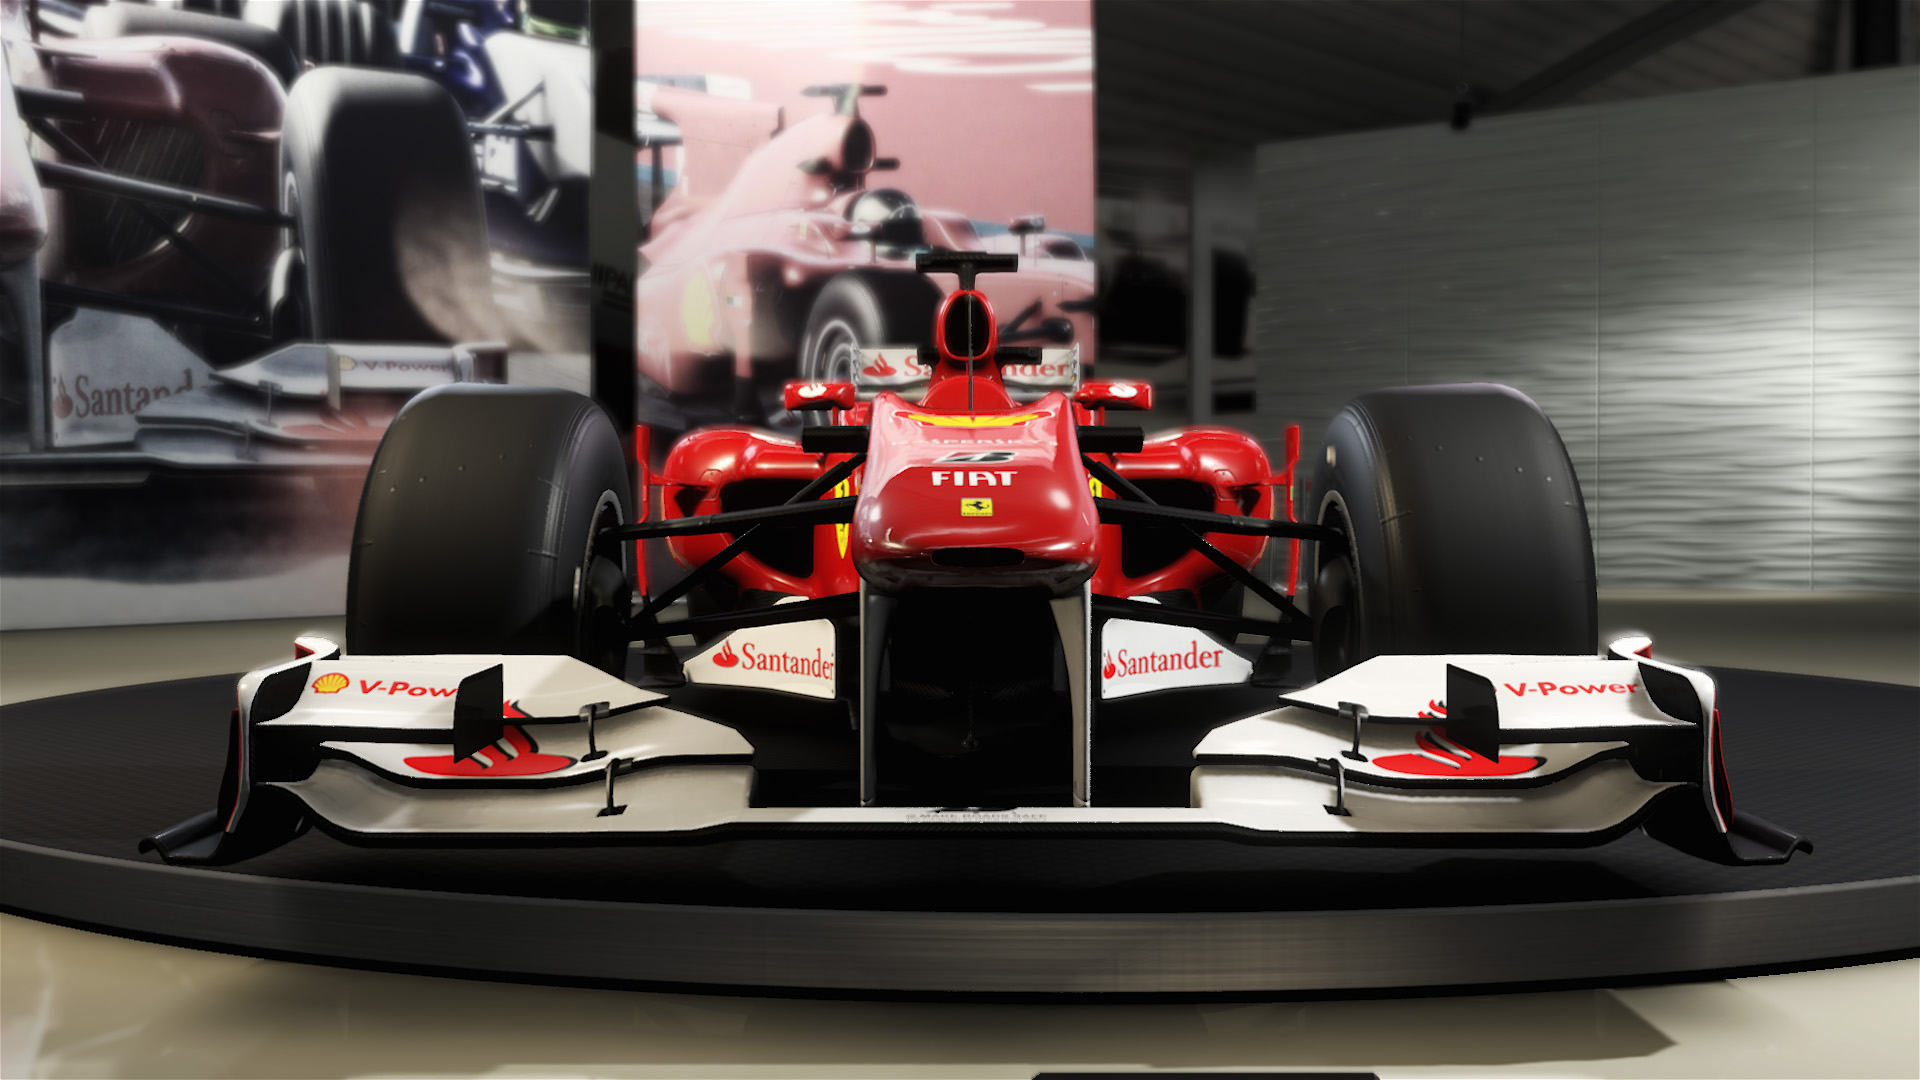 Ferrari F10 | RaceSimCentral